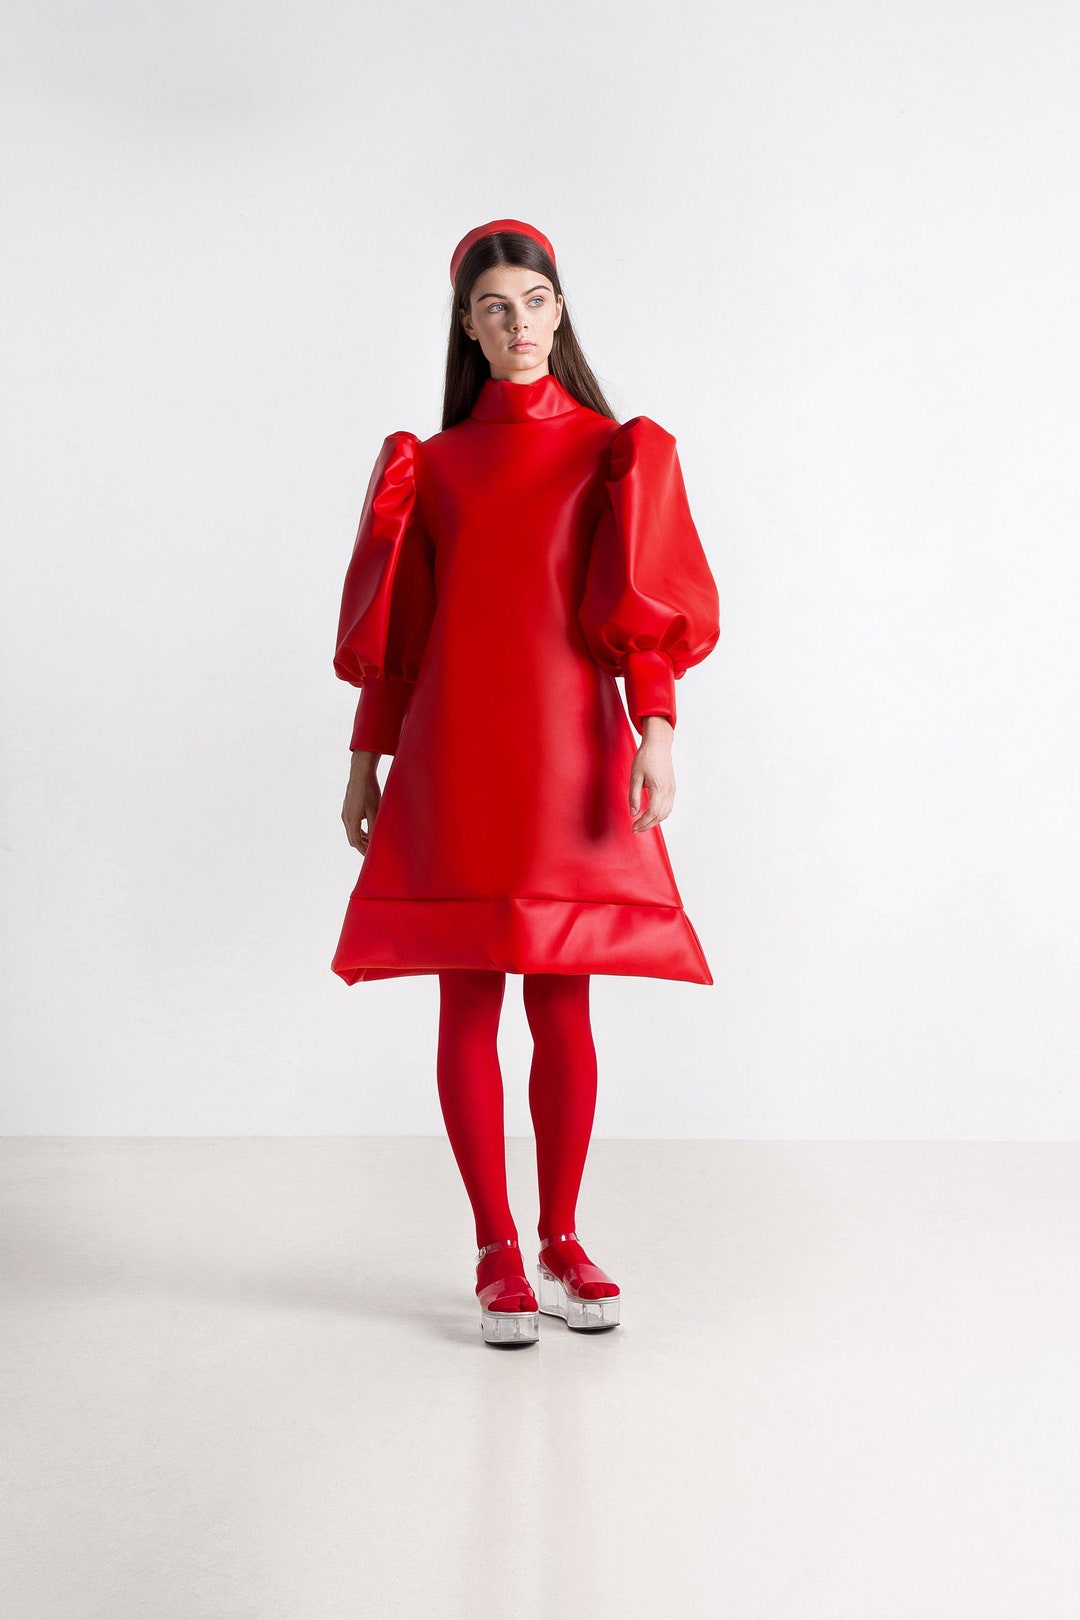 Red Faux Leather Dress Angel Form Dress Geometric Dress Concept Design  Dress Pulpy Dress 